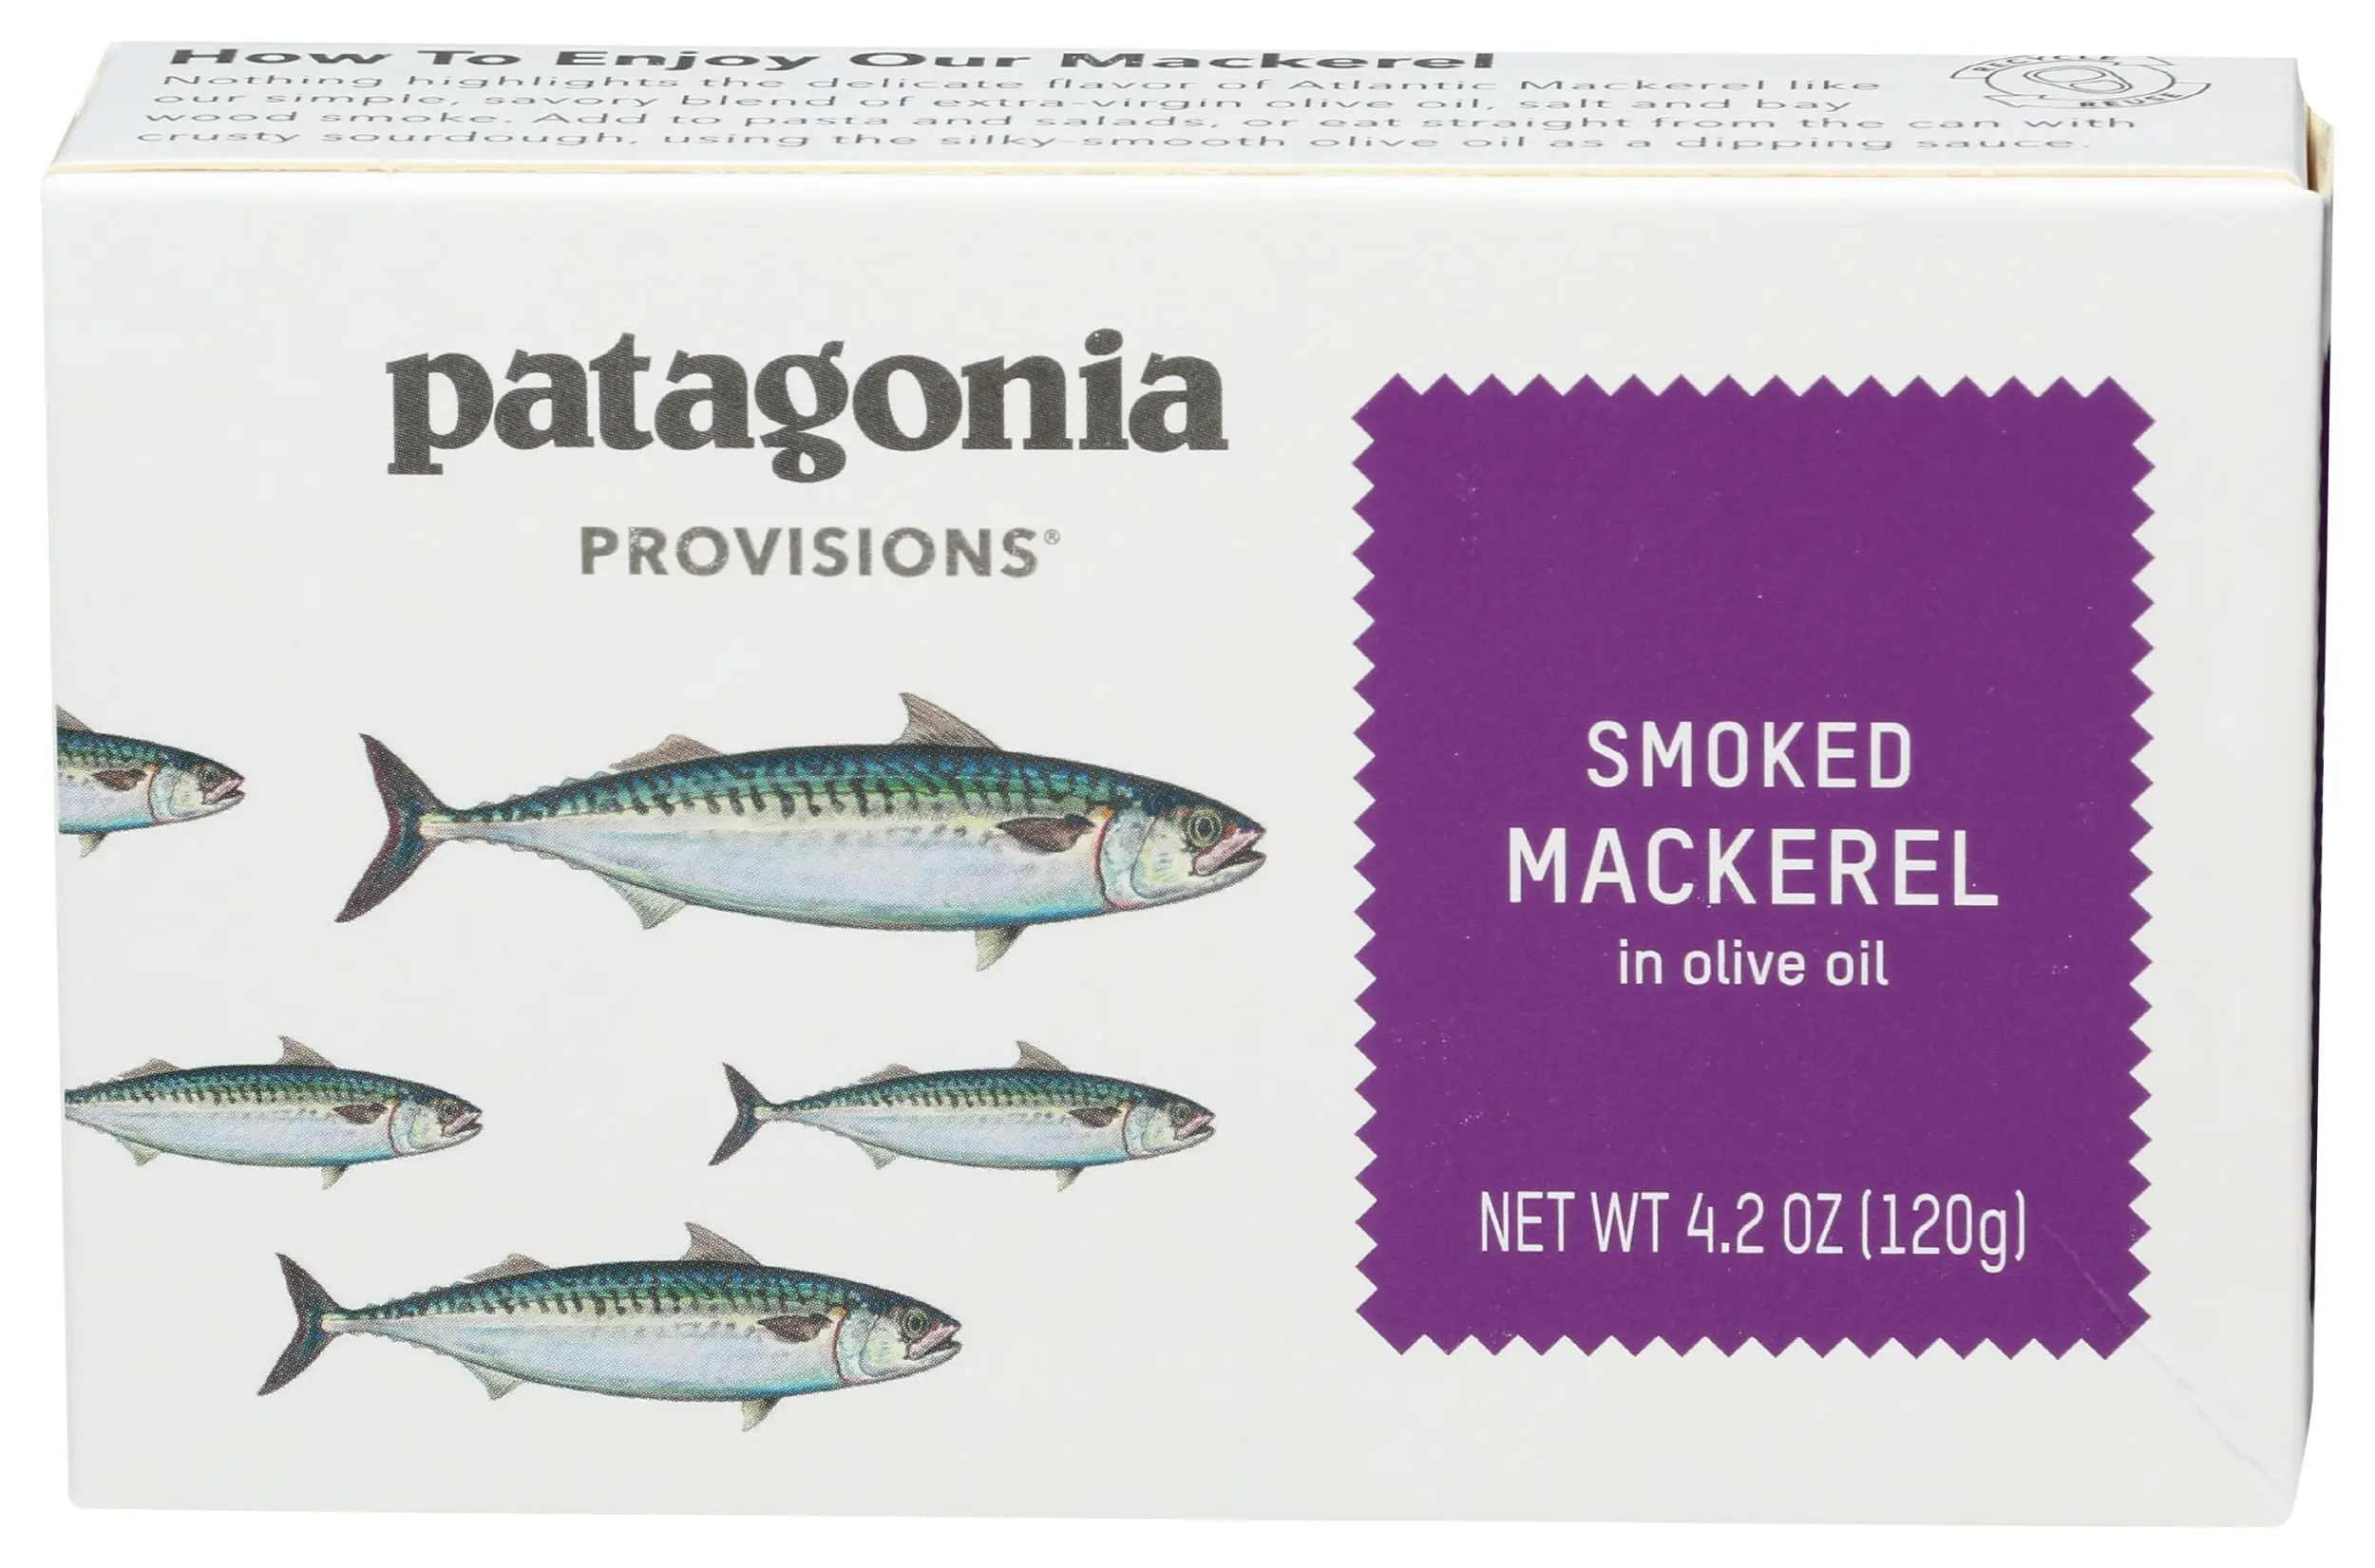 patagonia provisions smoked mackerel - How do you eat Patagonia mackerel